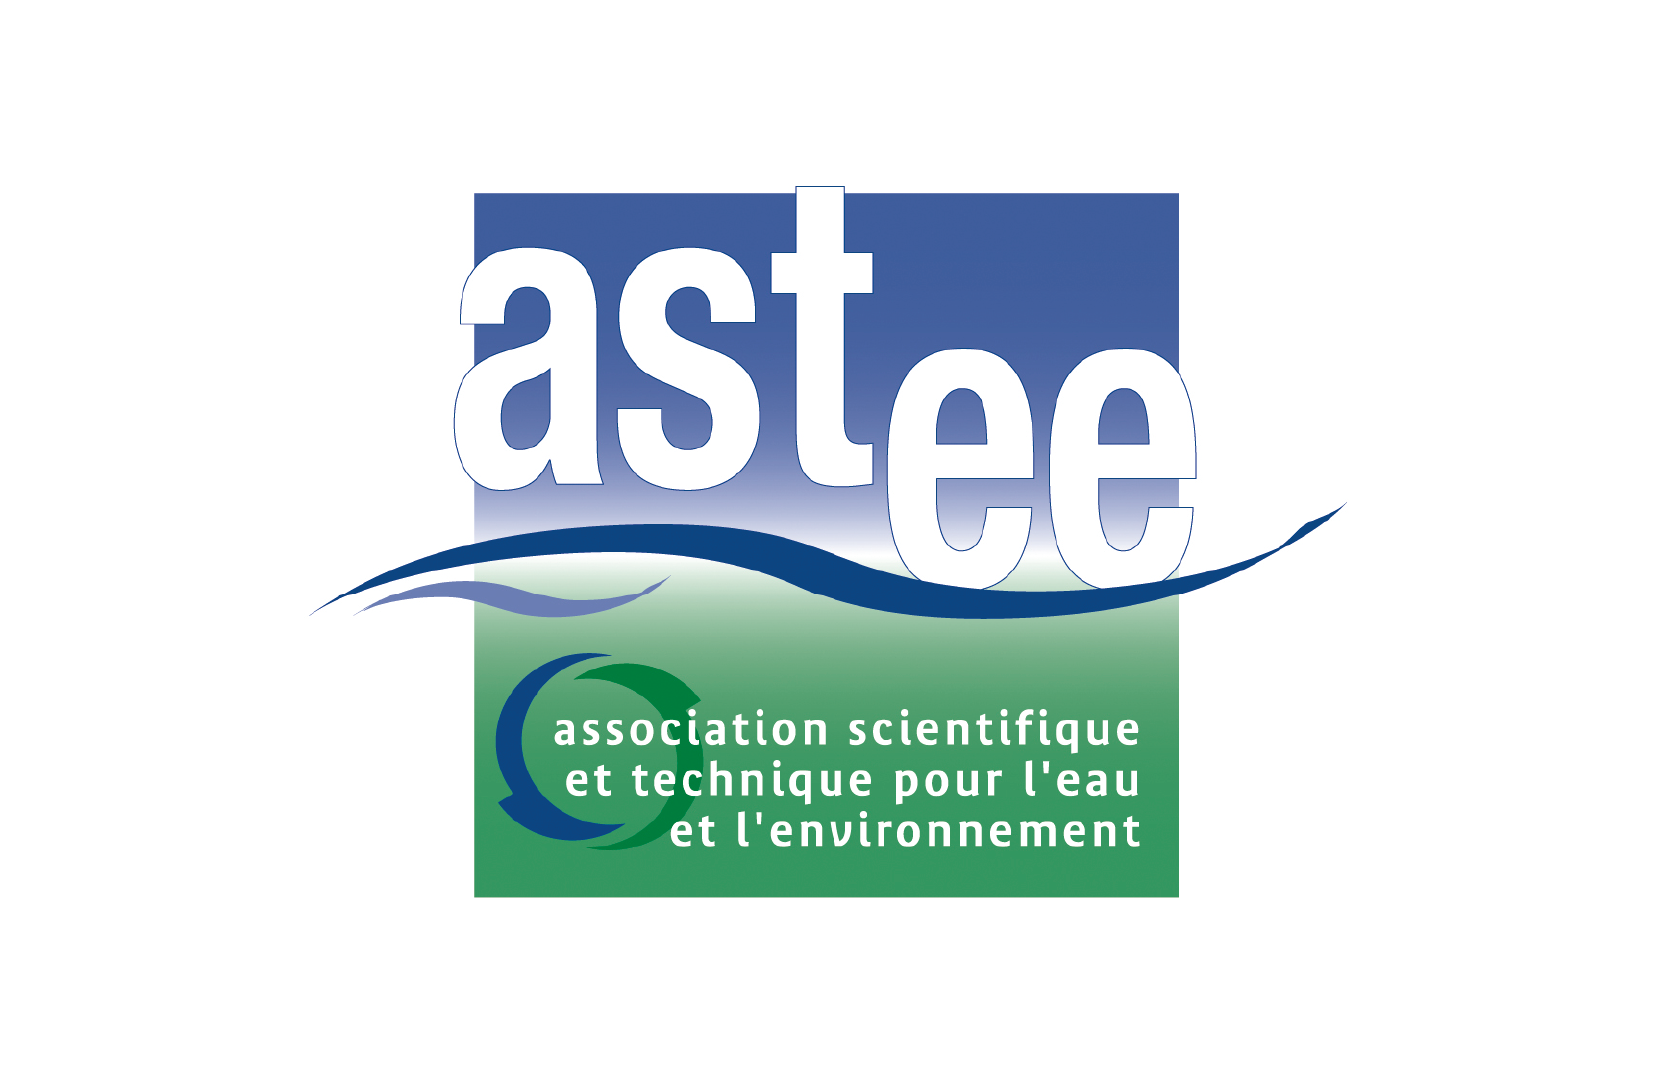 ASTEE logo